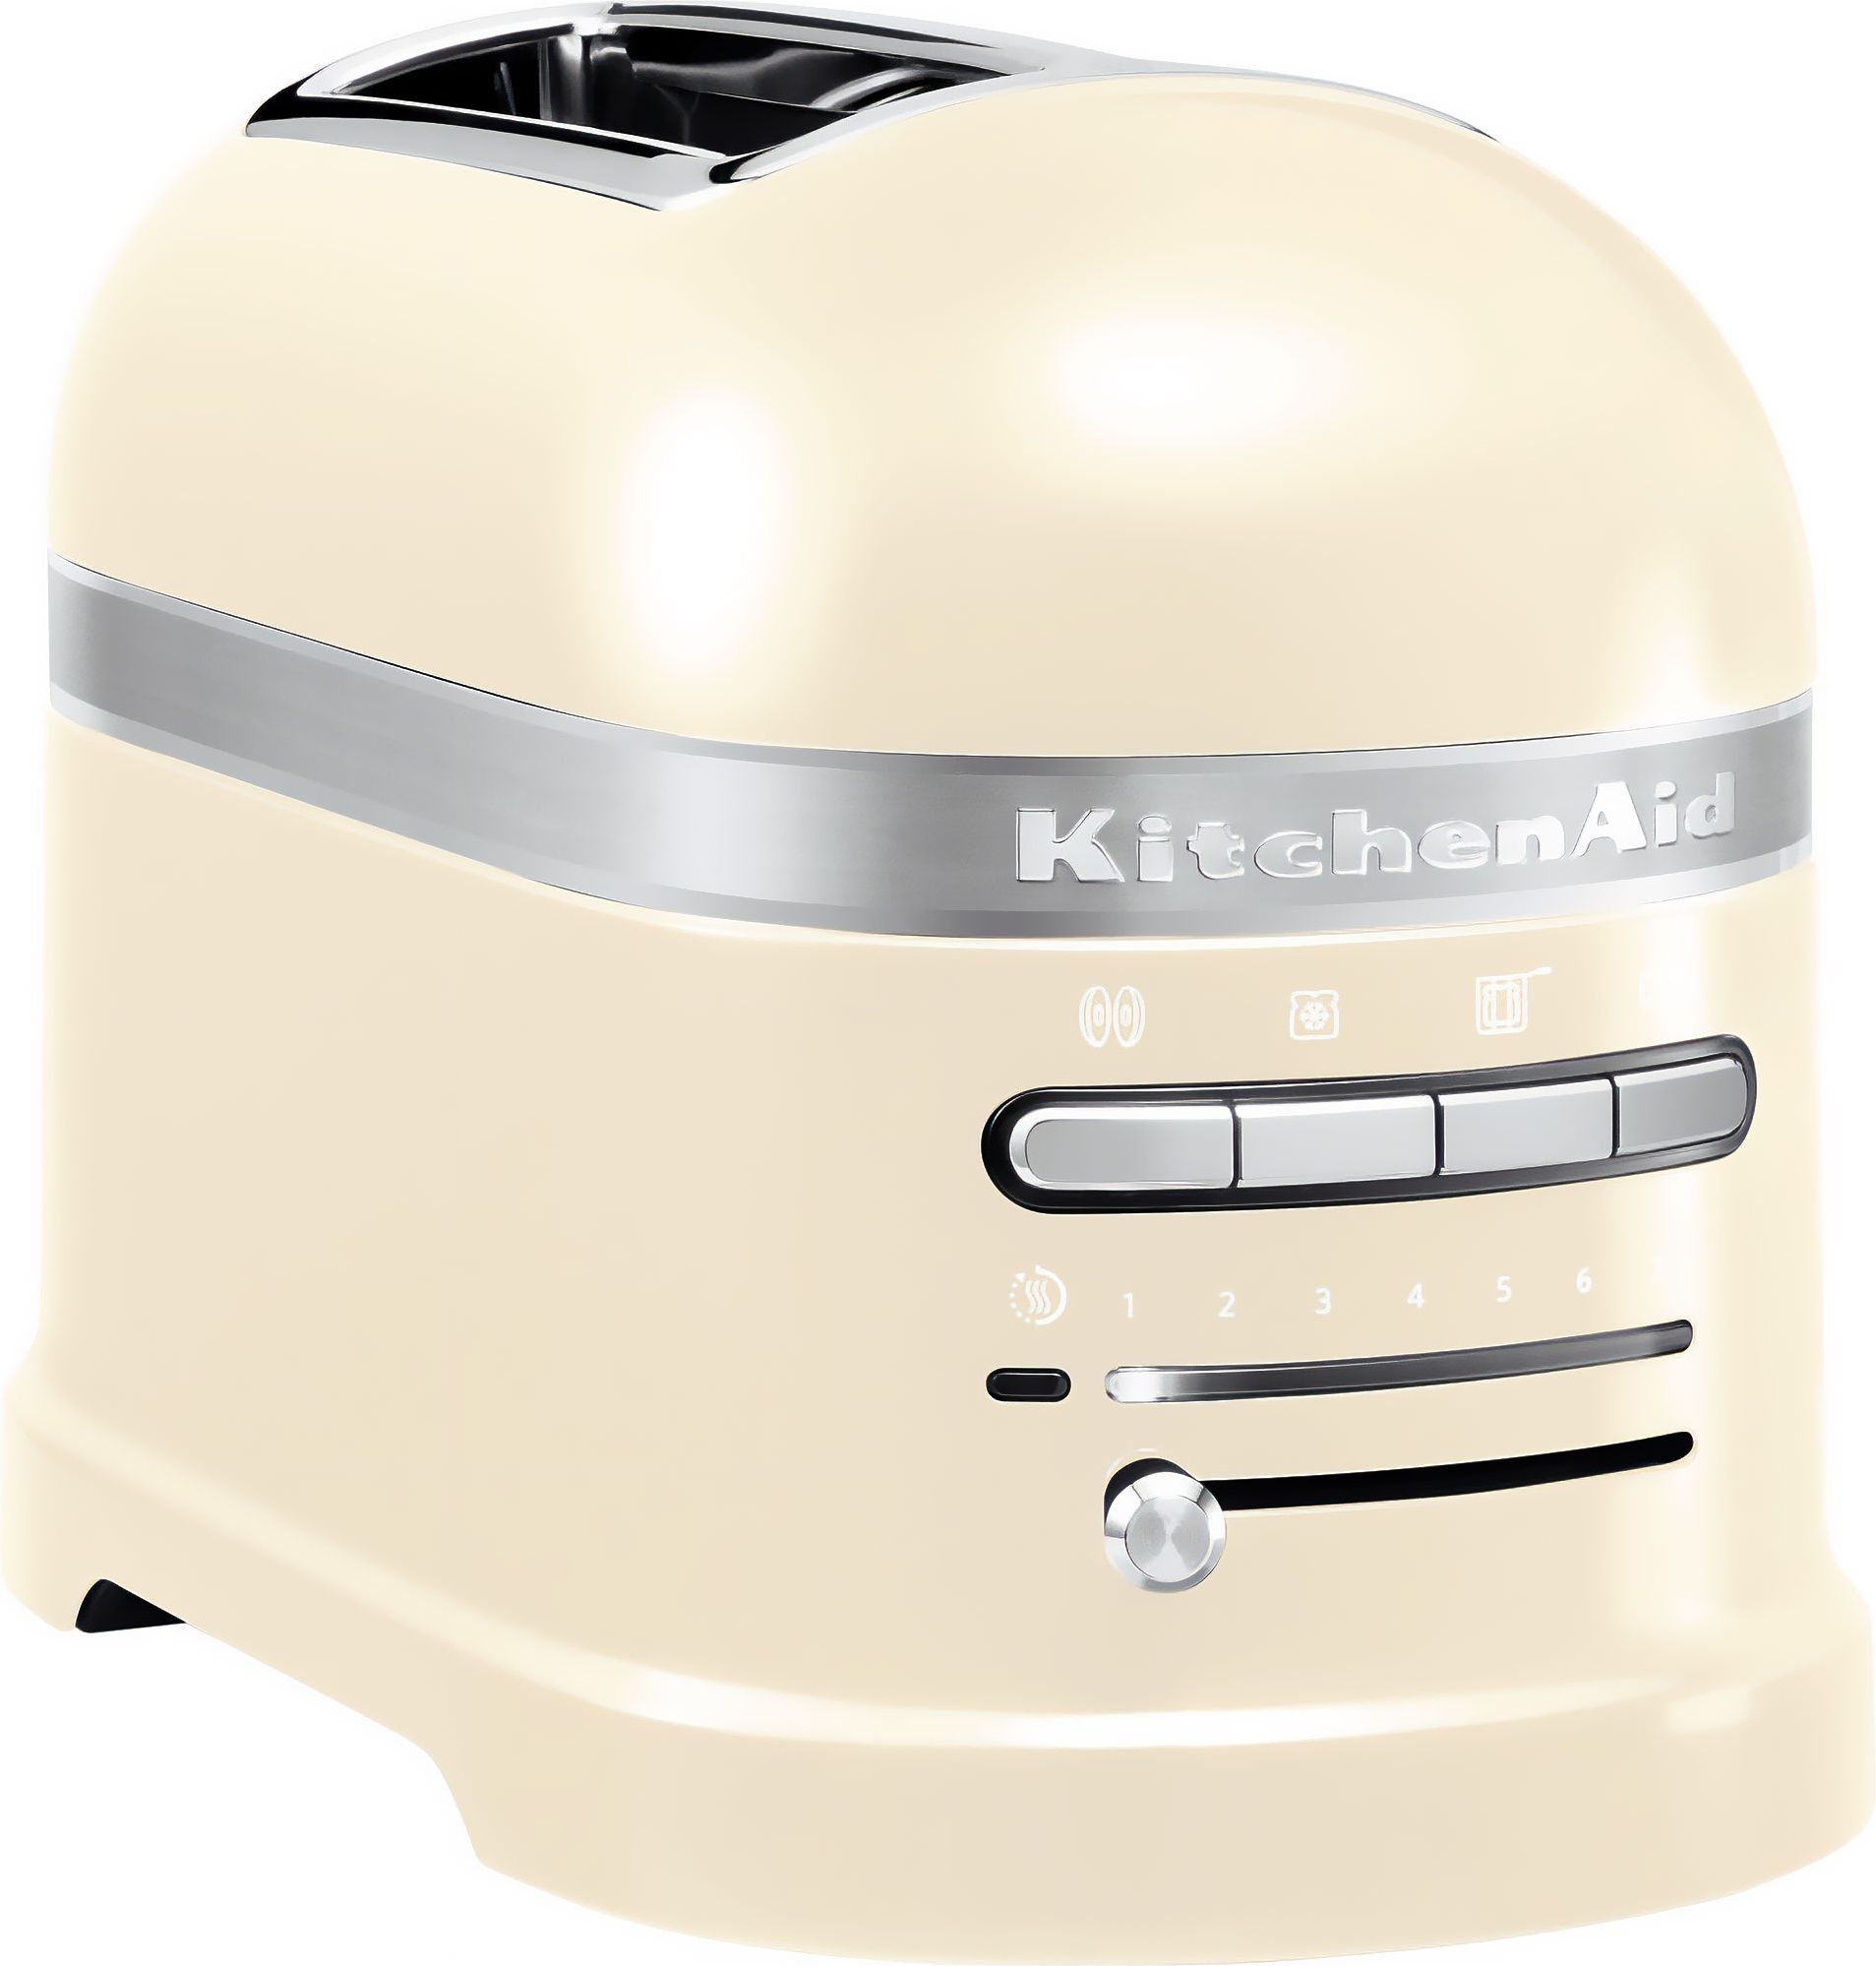 KitchenAid 5KMT2204BAC 2 Slice Toaster - Almond Cream, Cream